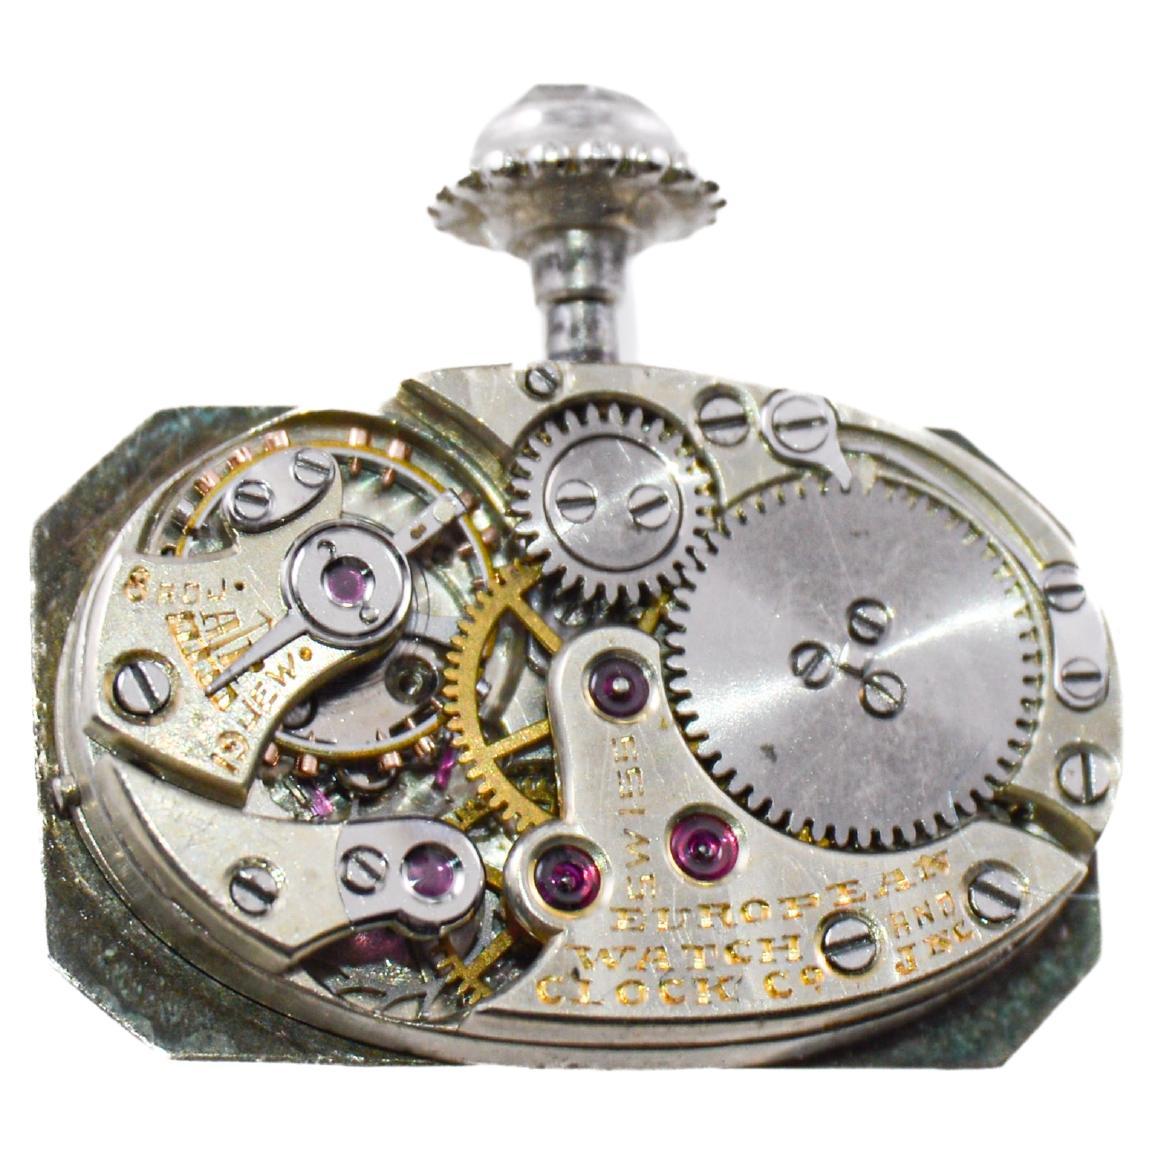 Cartier Platinum Ladies Watch 1920's Art Deco by European Watch & Clock Co. For Sale 9